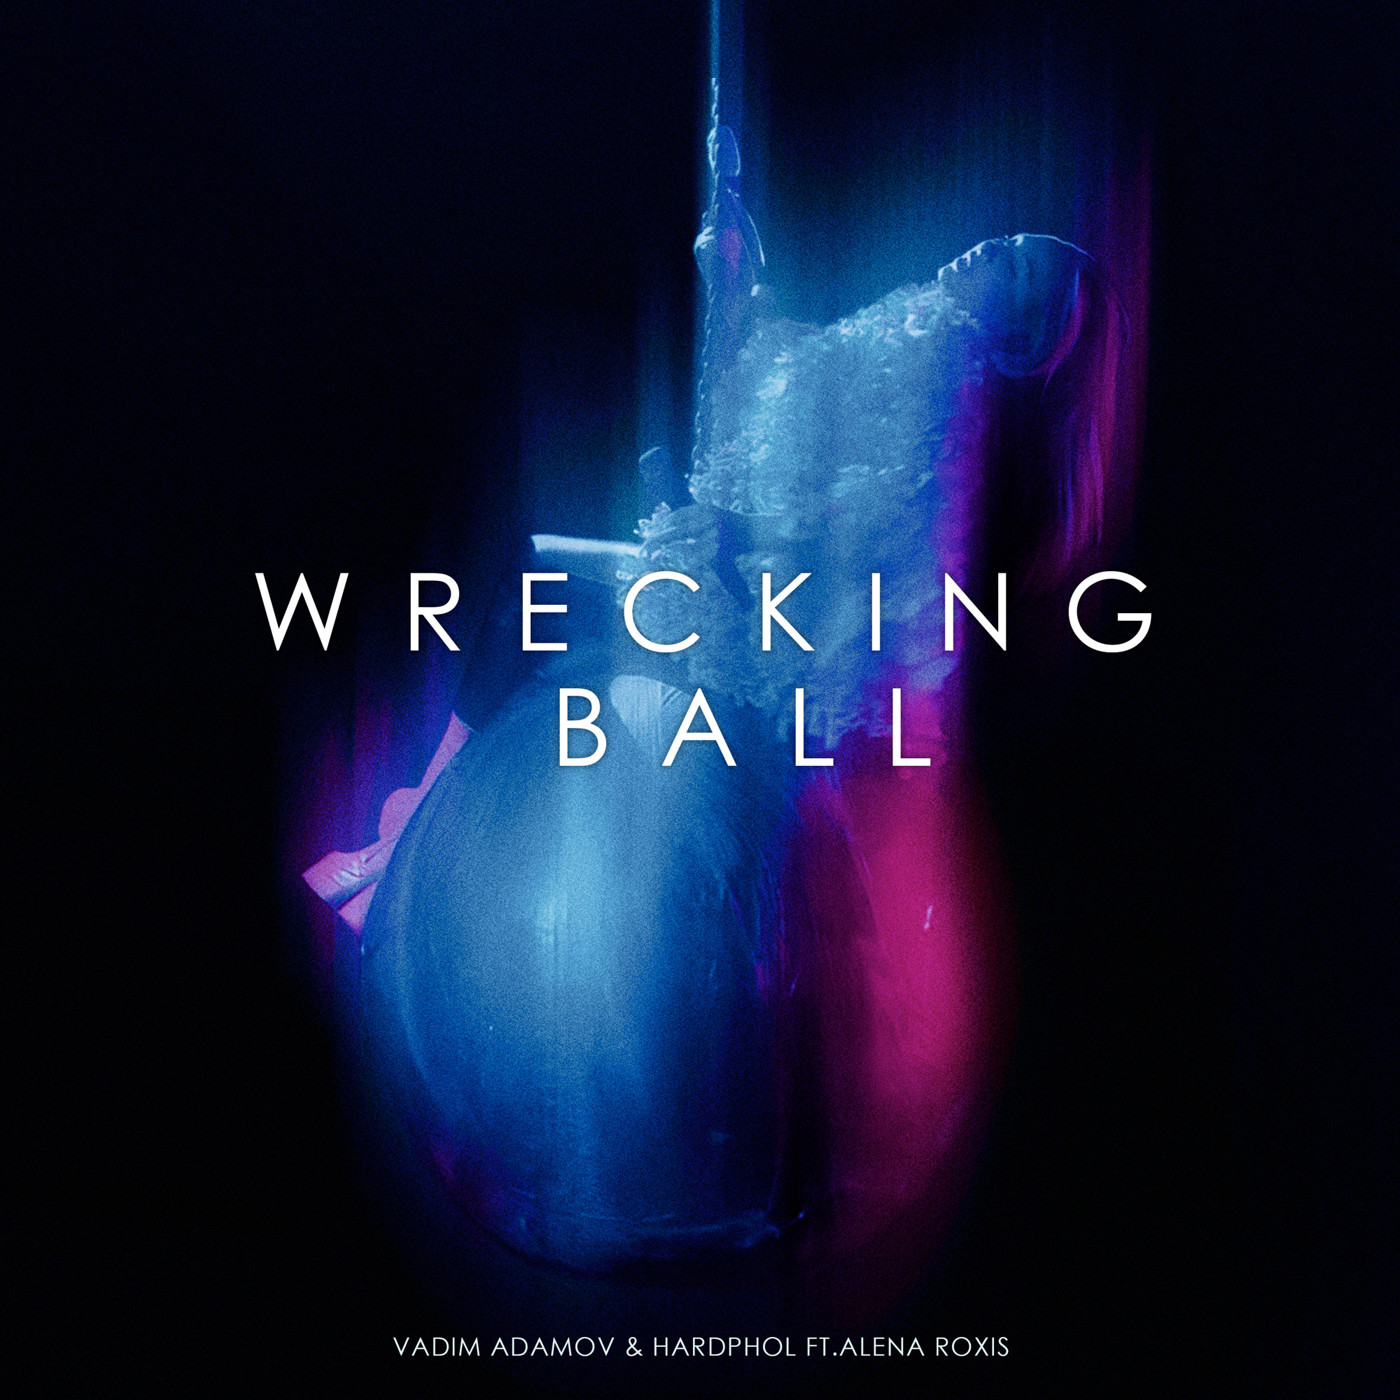 Vadim Adamov & Hardphol ft. Alena Roxis - Wrecking Ball